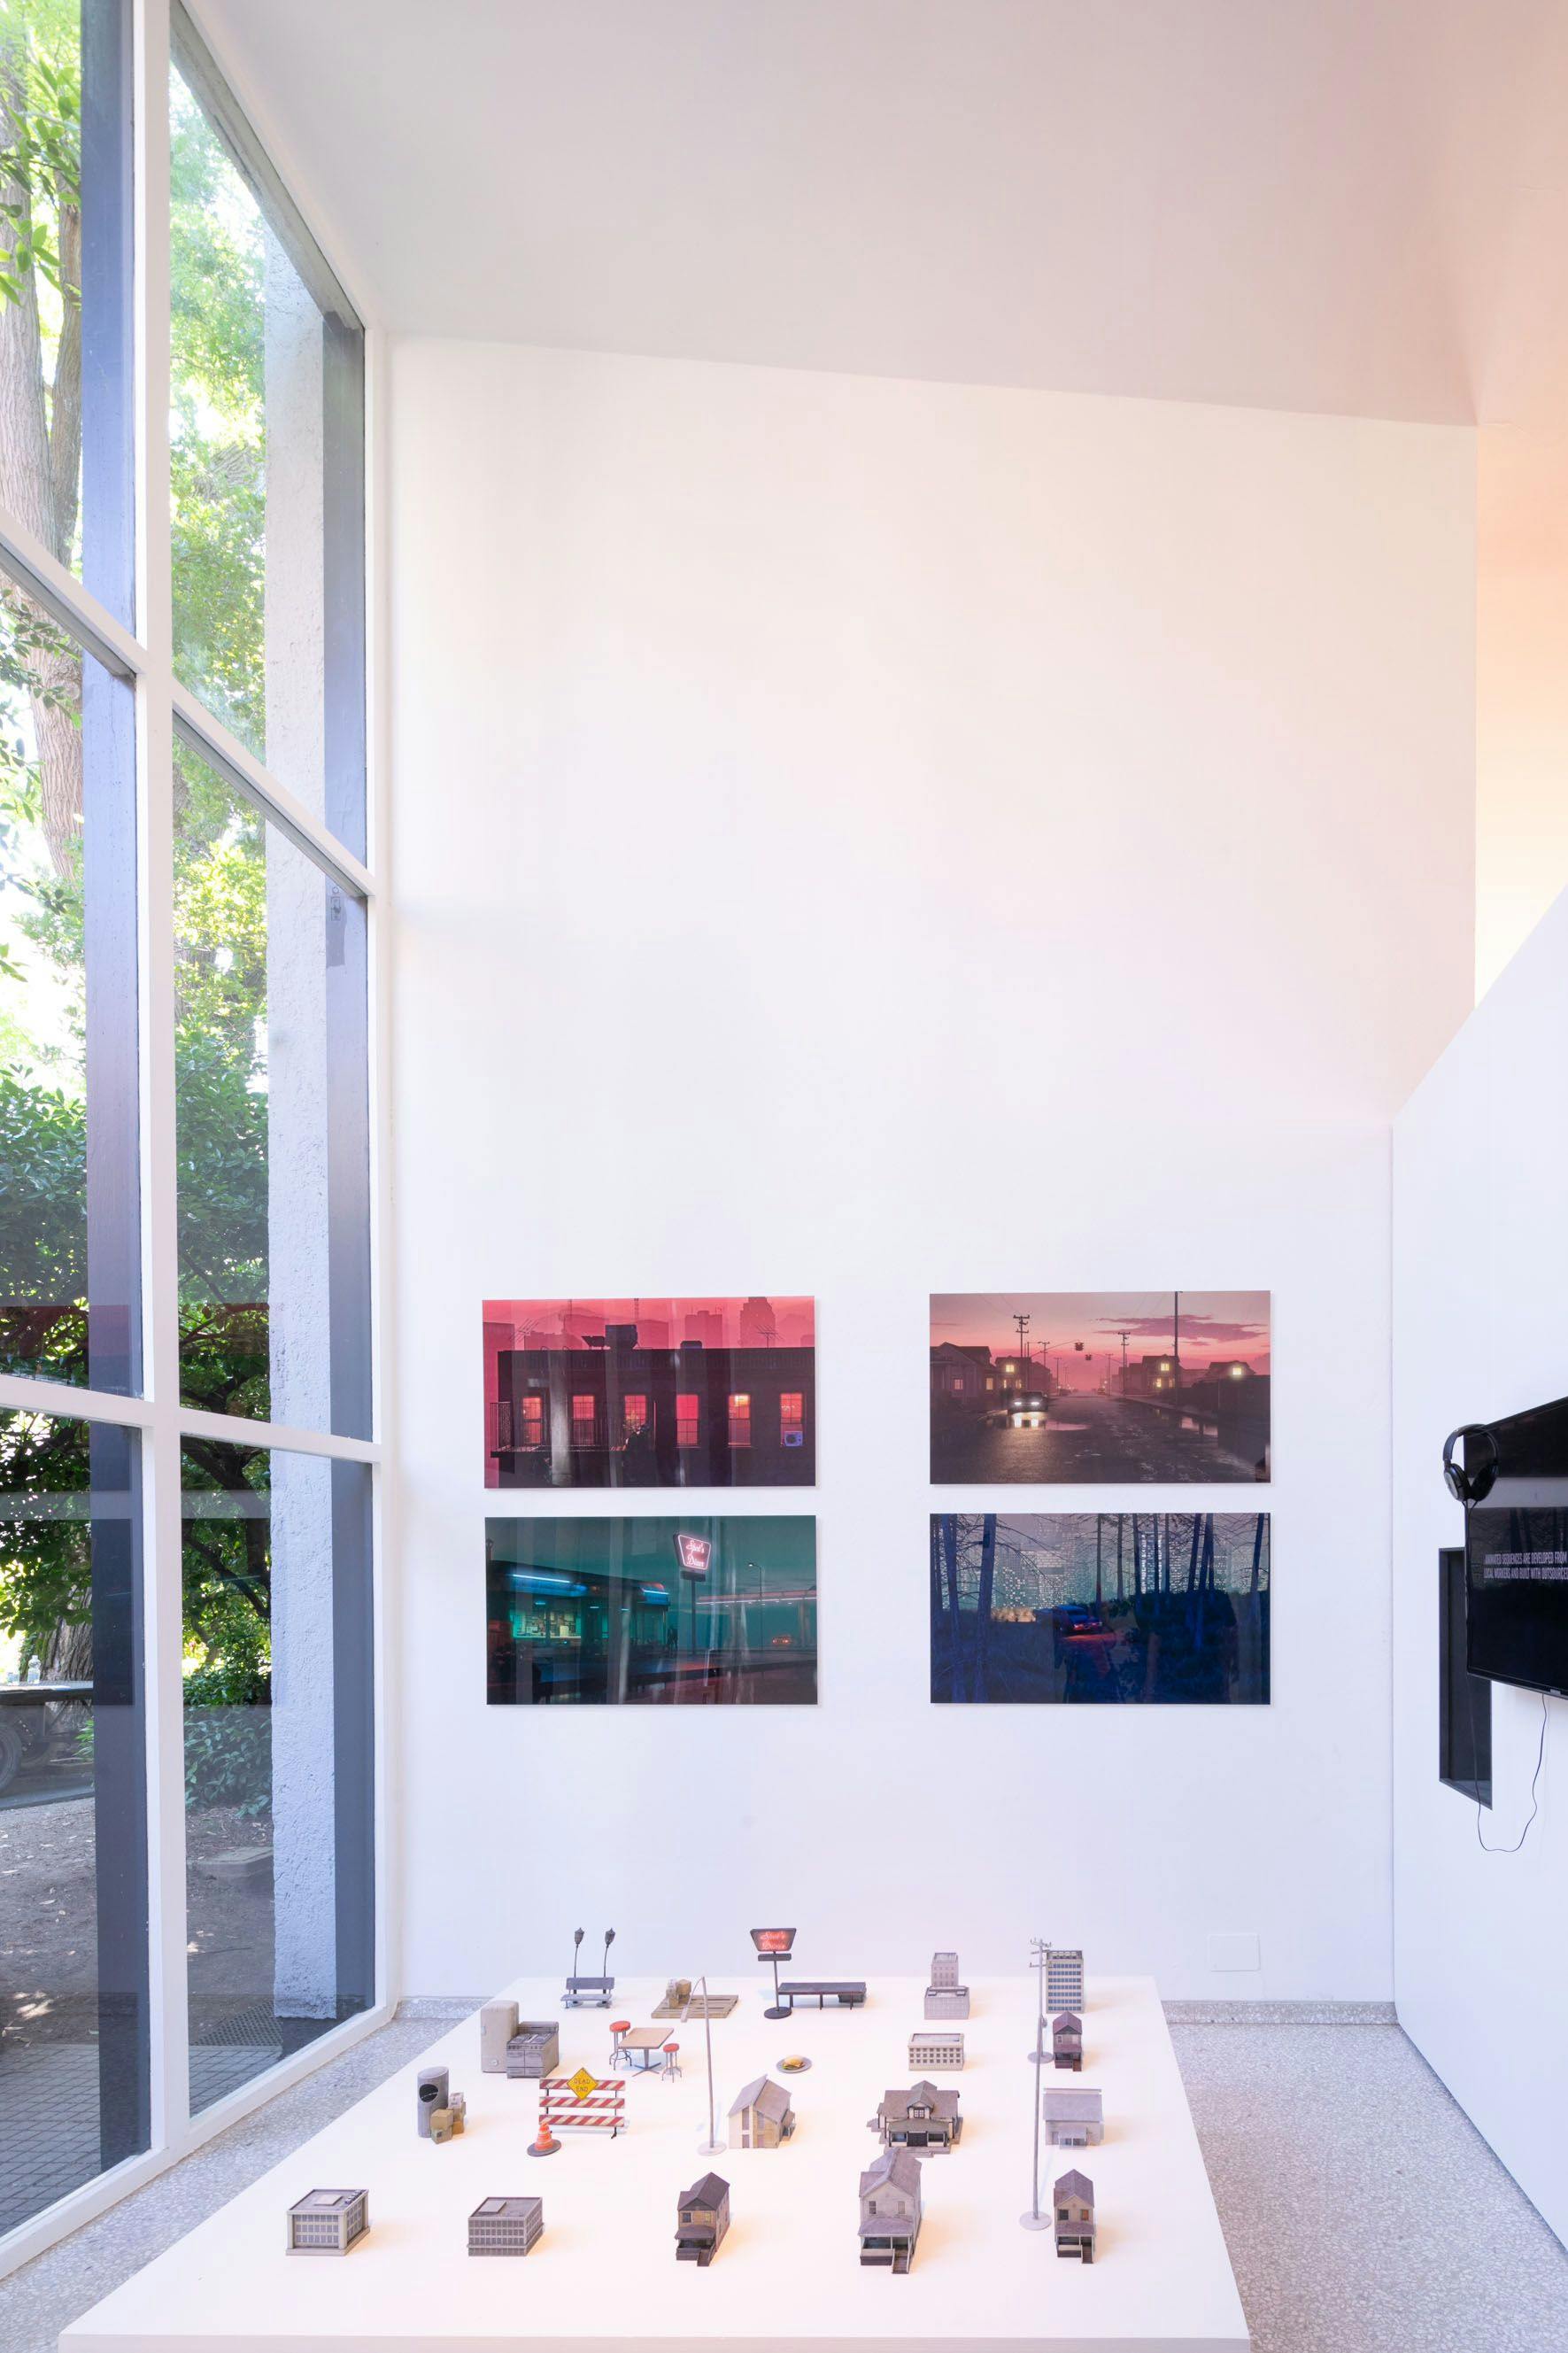 Renderlands installation, Liam Young. Dutch Pavilion WORK, BODY, LEISURE. 16th International Architecture Exhibition - La Biennale di Venezia, FREESPACE. Photo: Daria Scagliola 